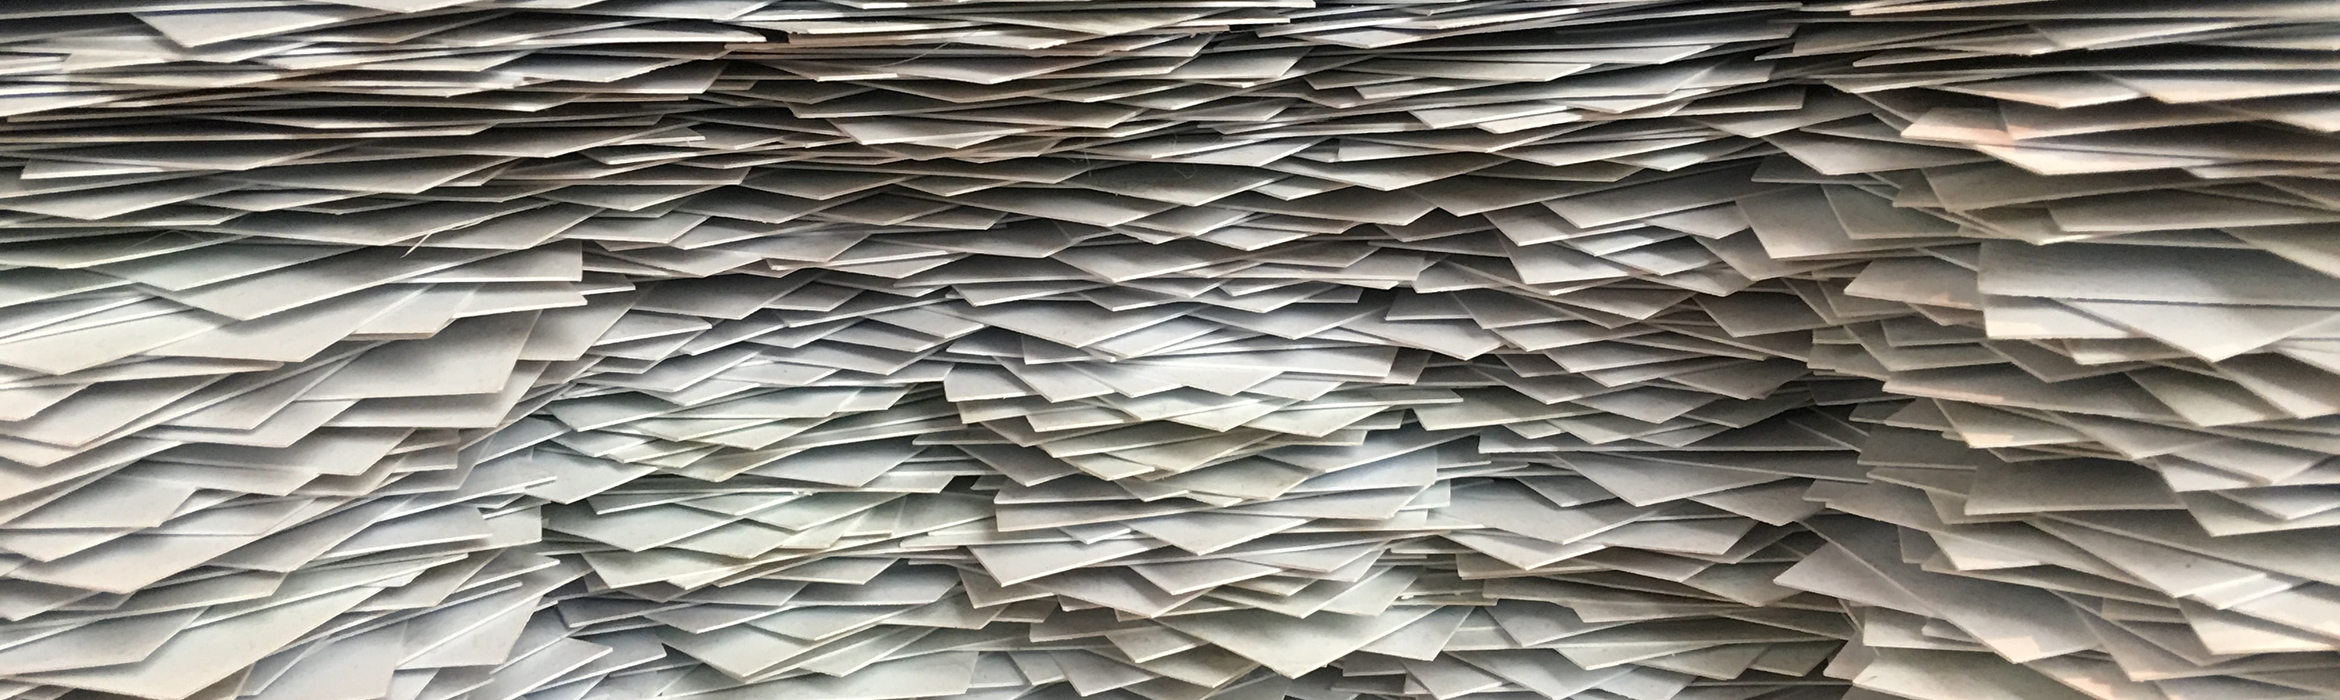 Stacks of paper